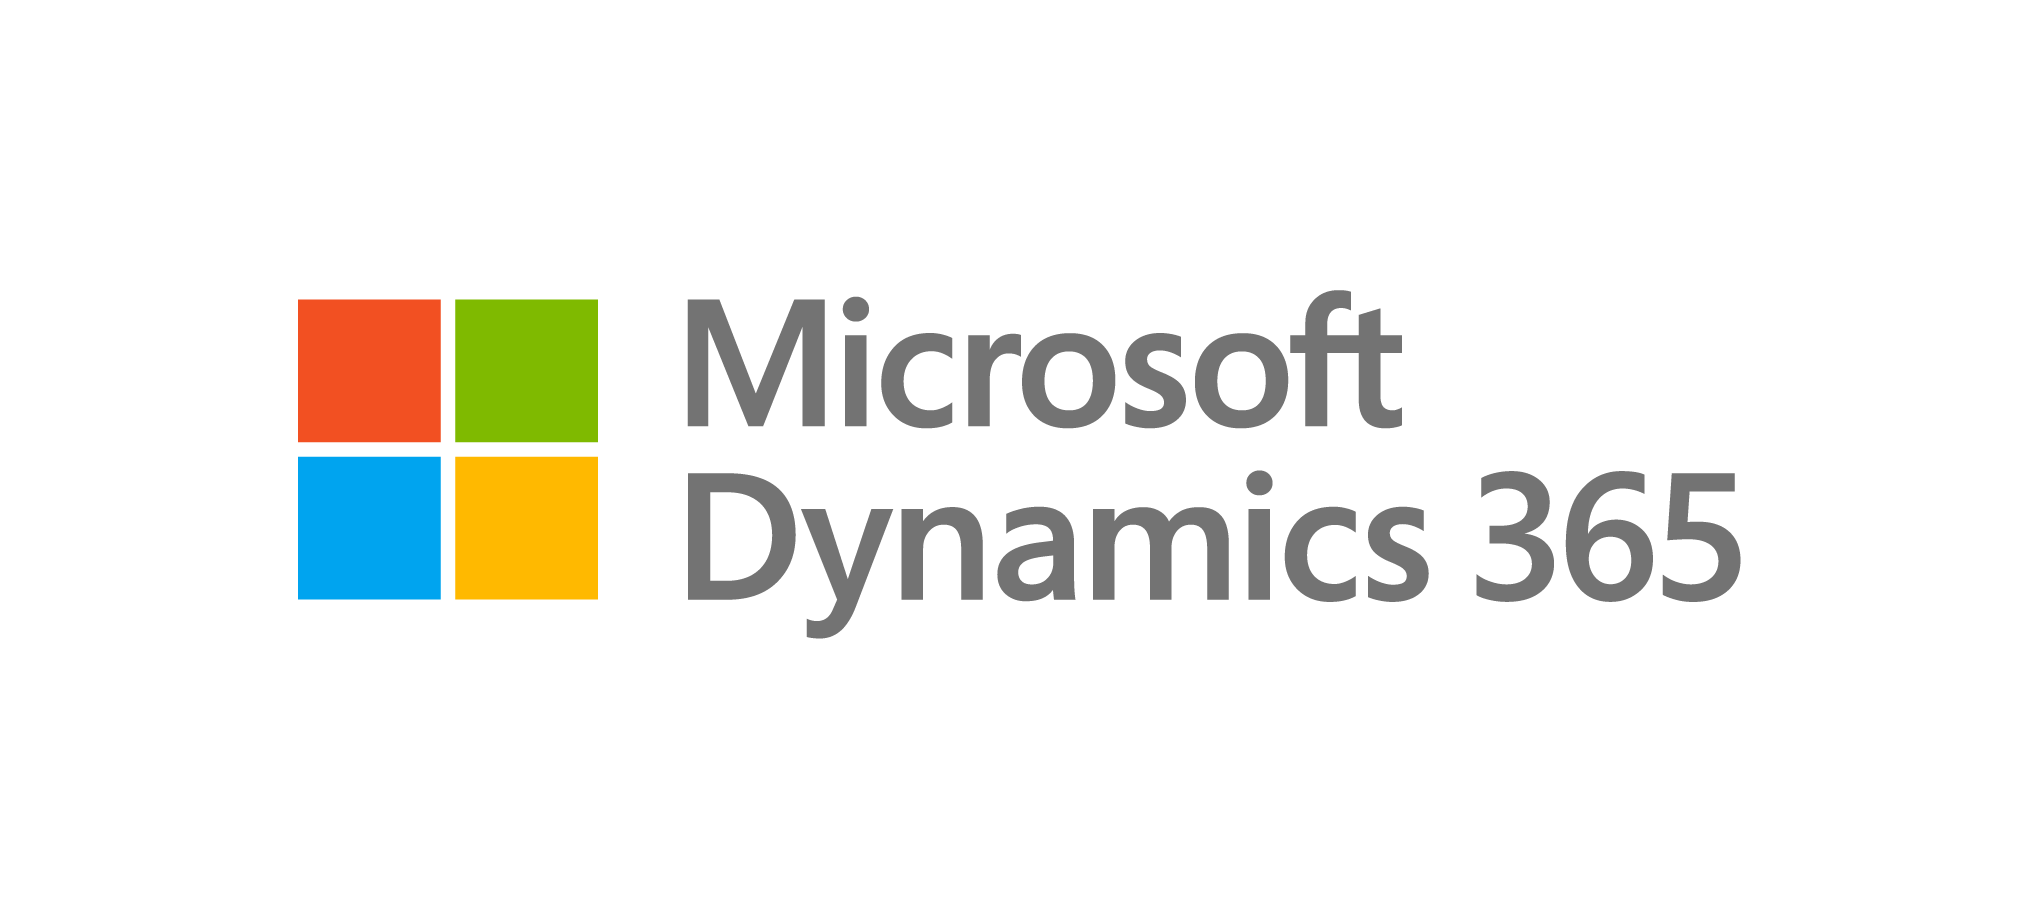 Microsoft Dynamics 365 | ChannelPro Events Team